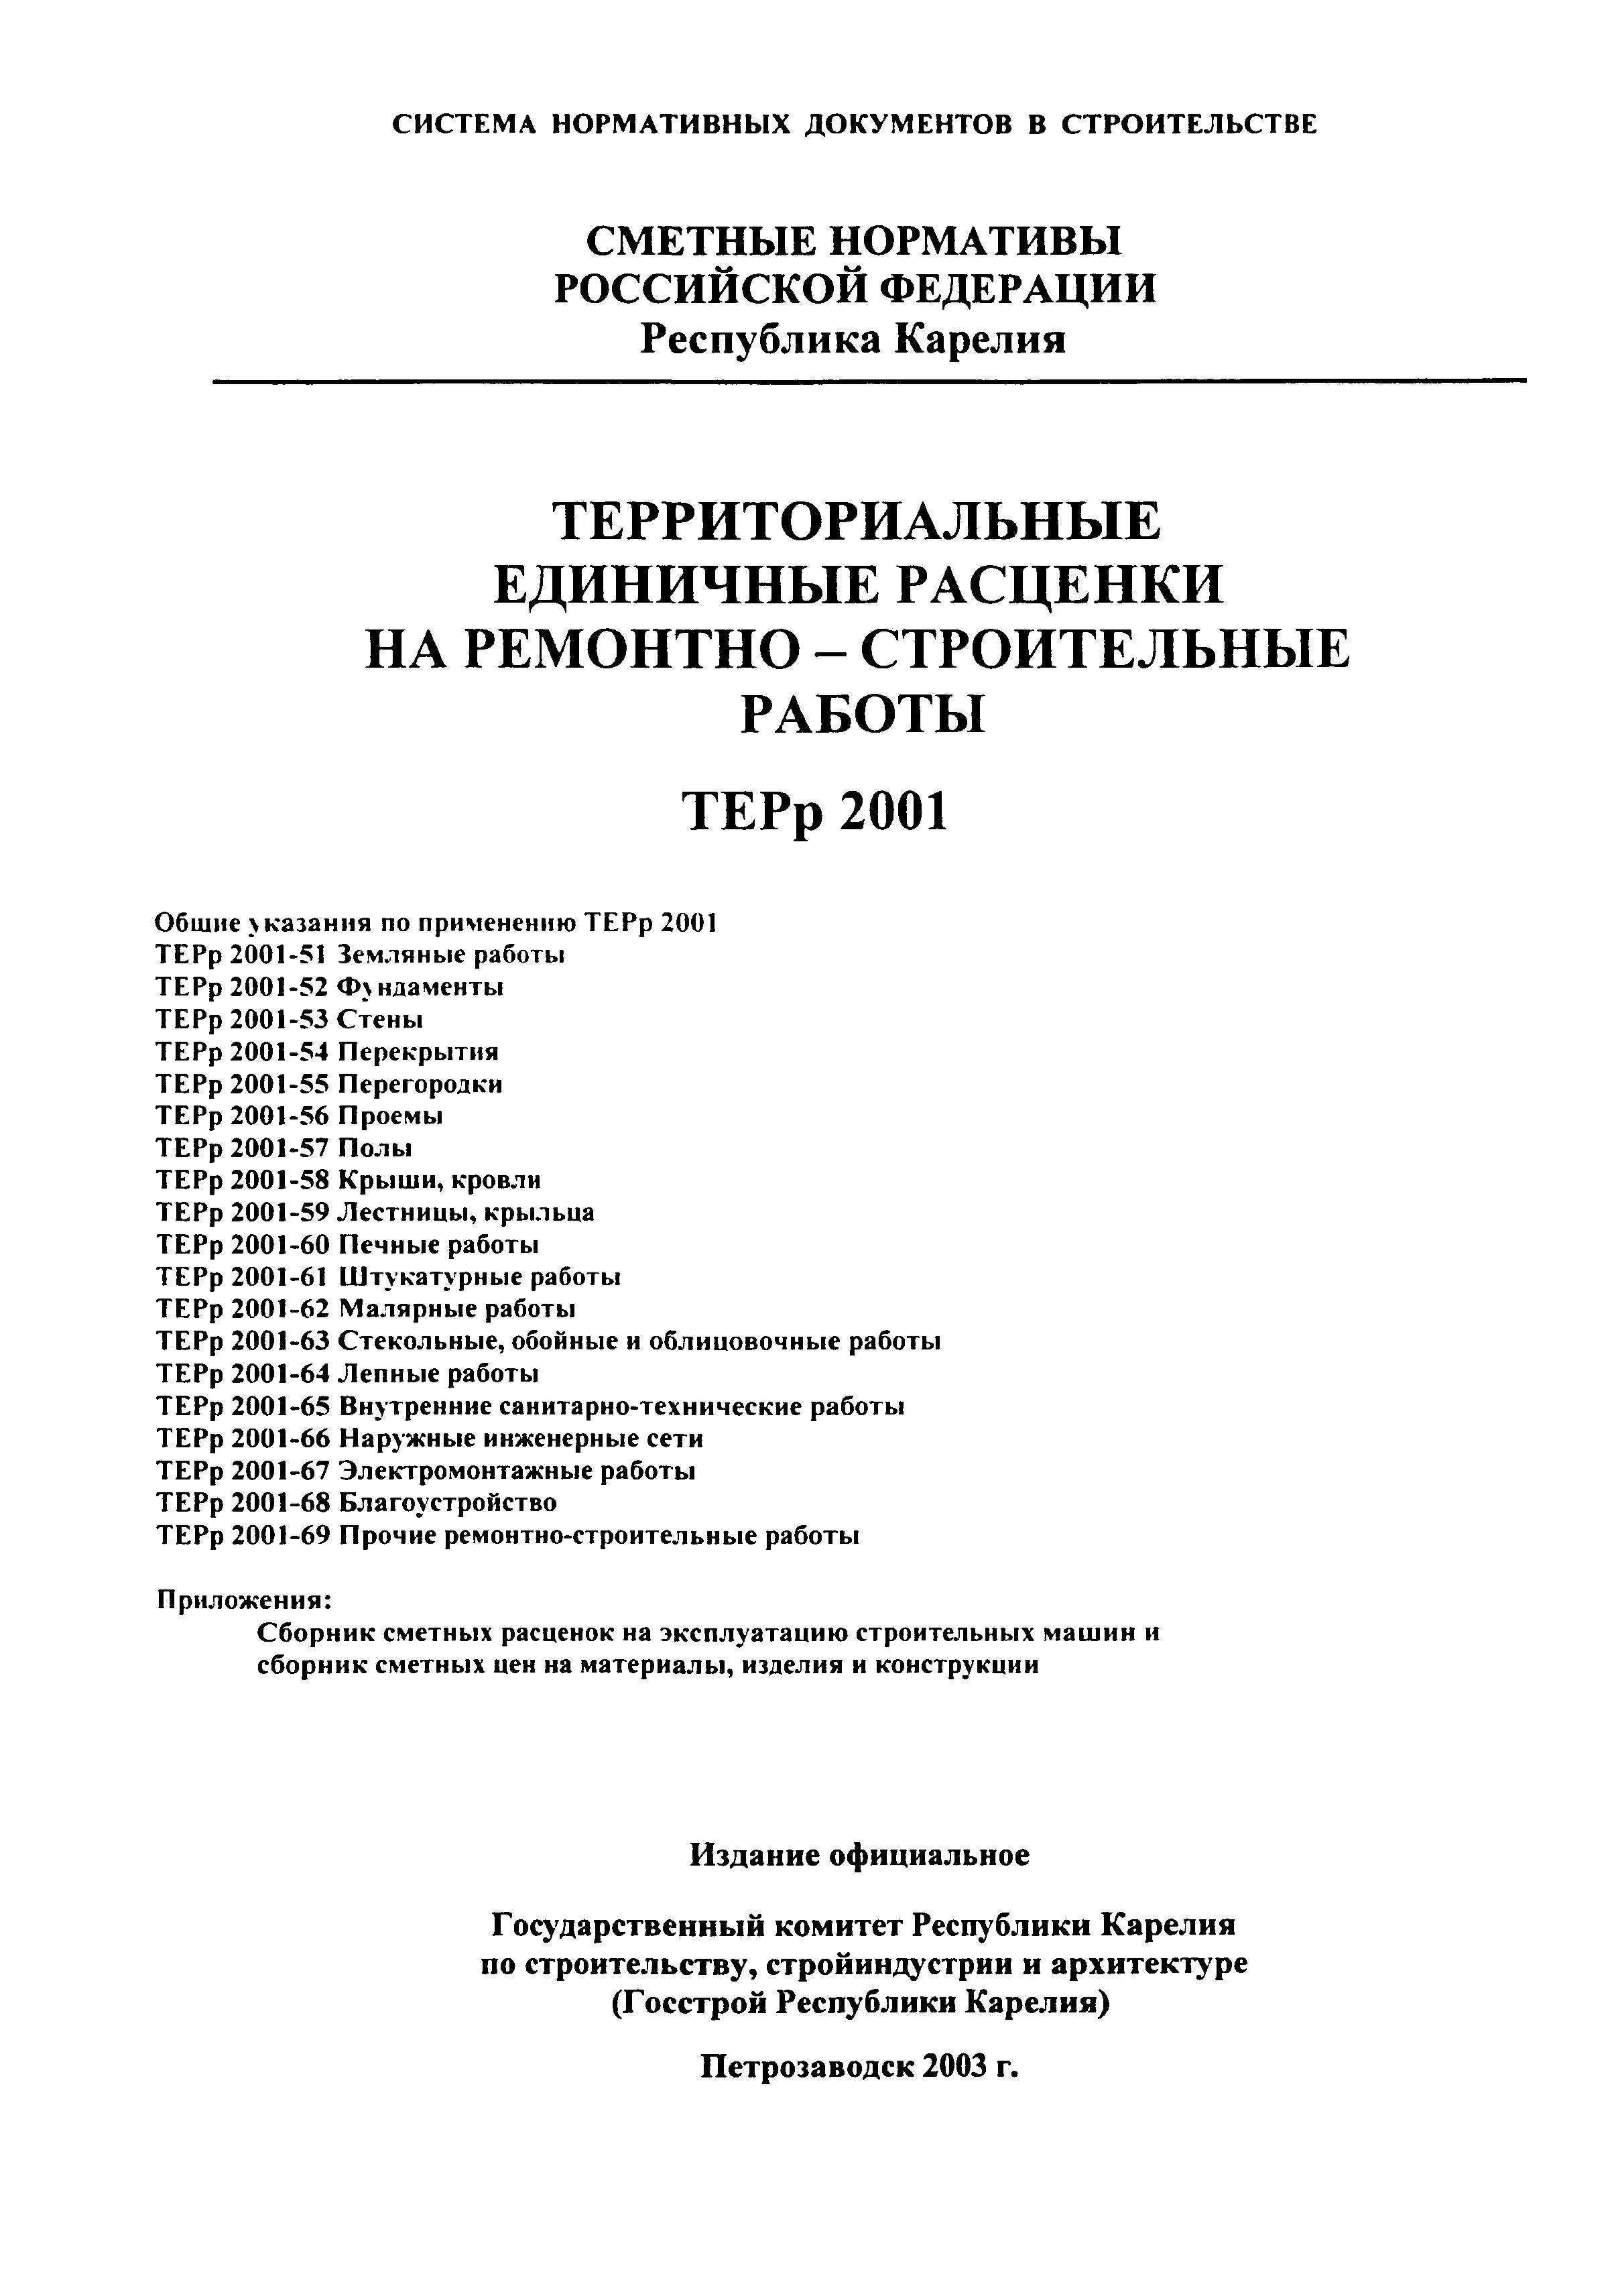 ТЕРр Республика Карелия 2001-57